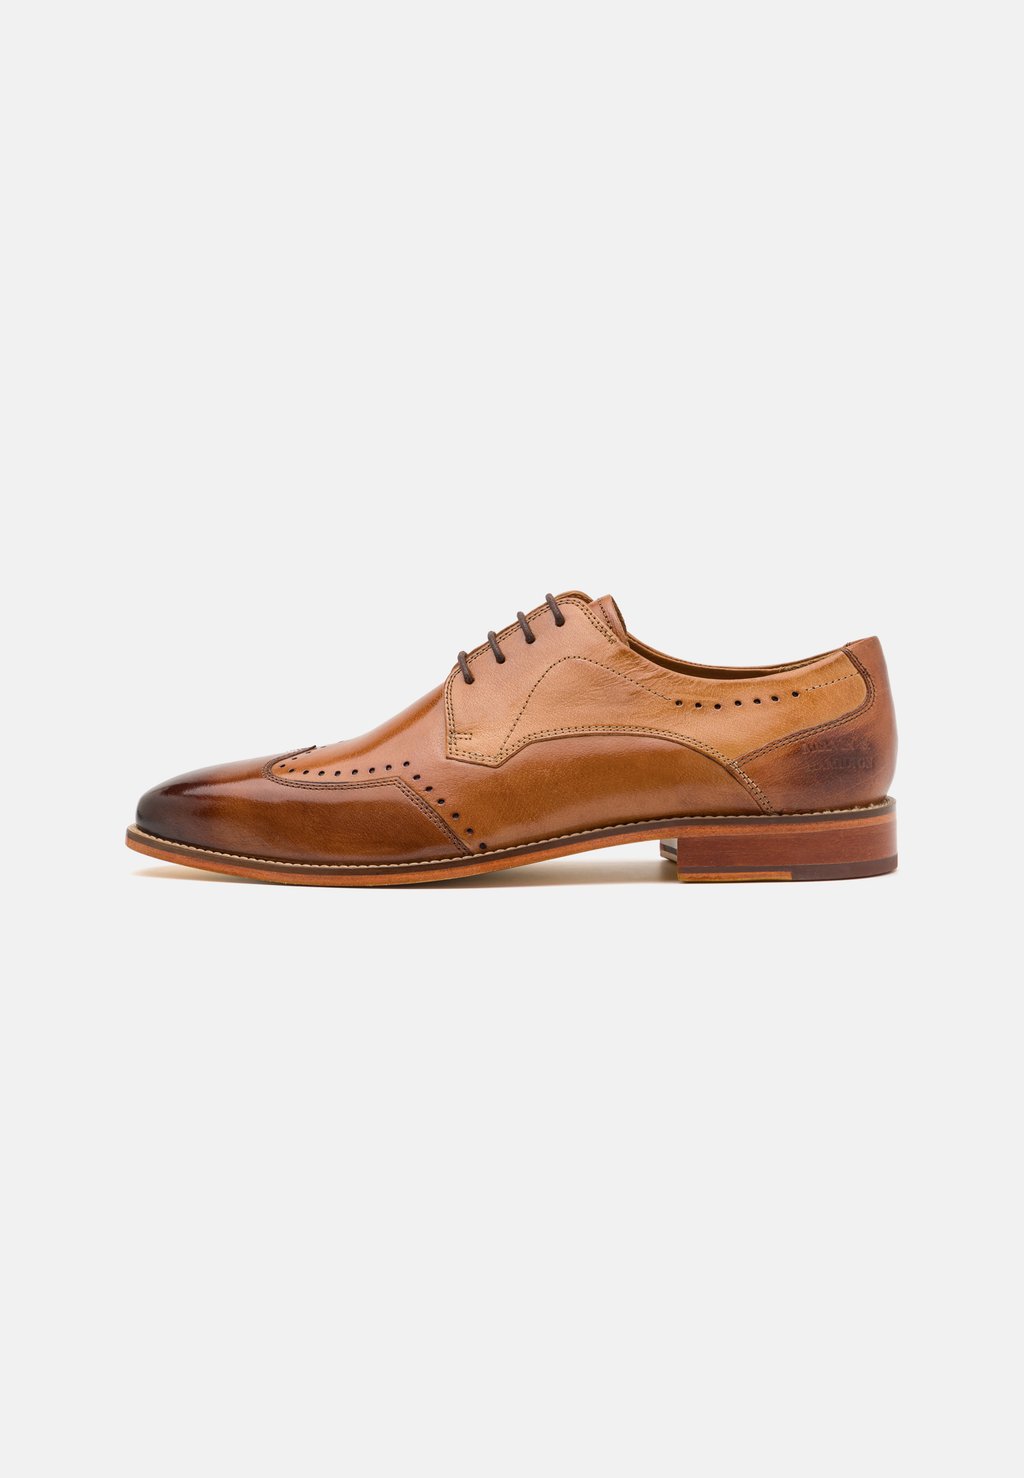 Элегантные туфли на шнуровке Alex 3 Melvin & Hamilton, цвет wood/tan/sand/dry hay/rich tan/natural